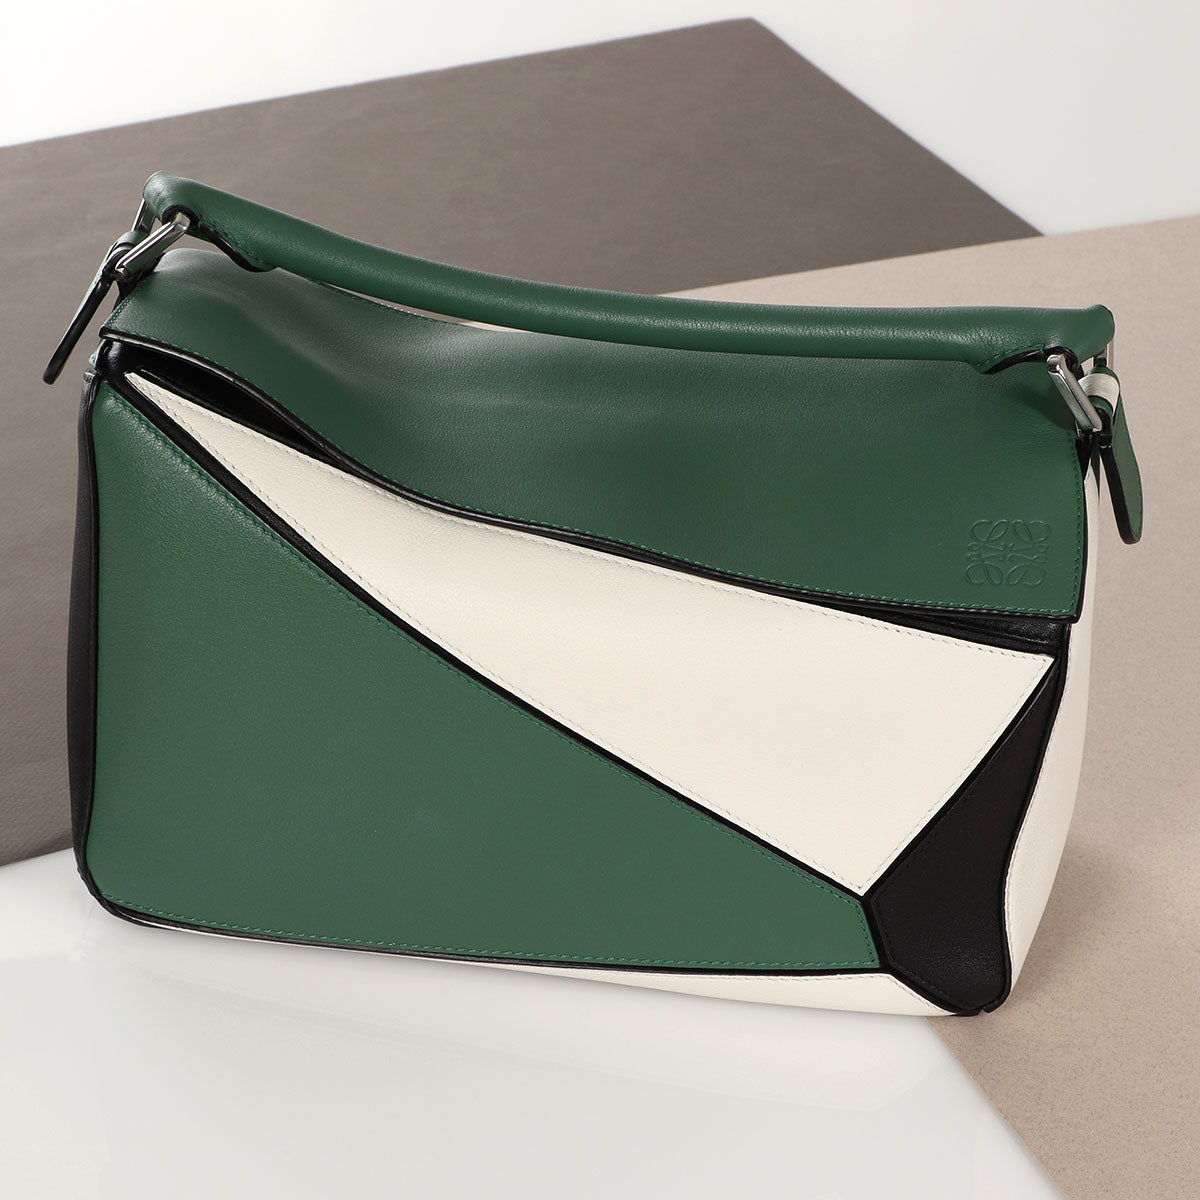 Loewe Medium Green, Black, and White Puzzle Bag